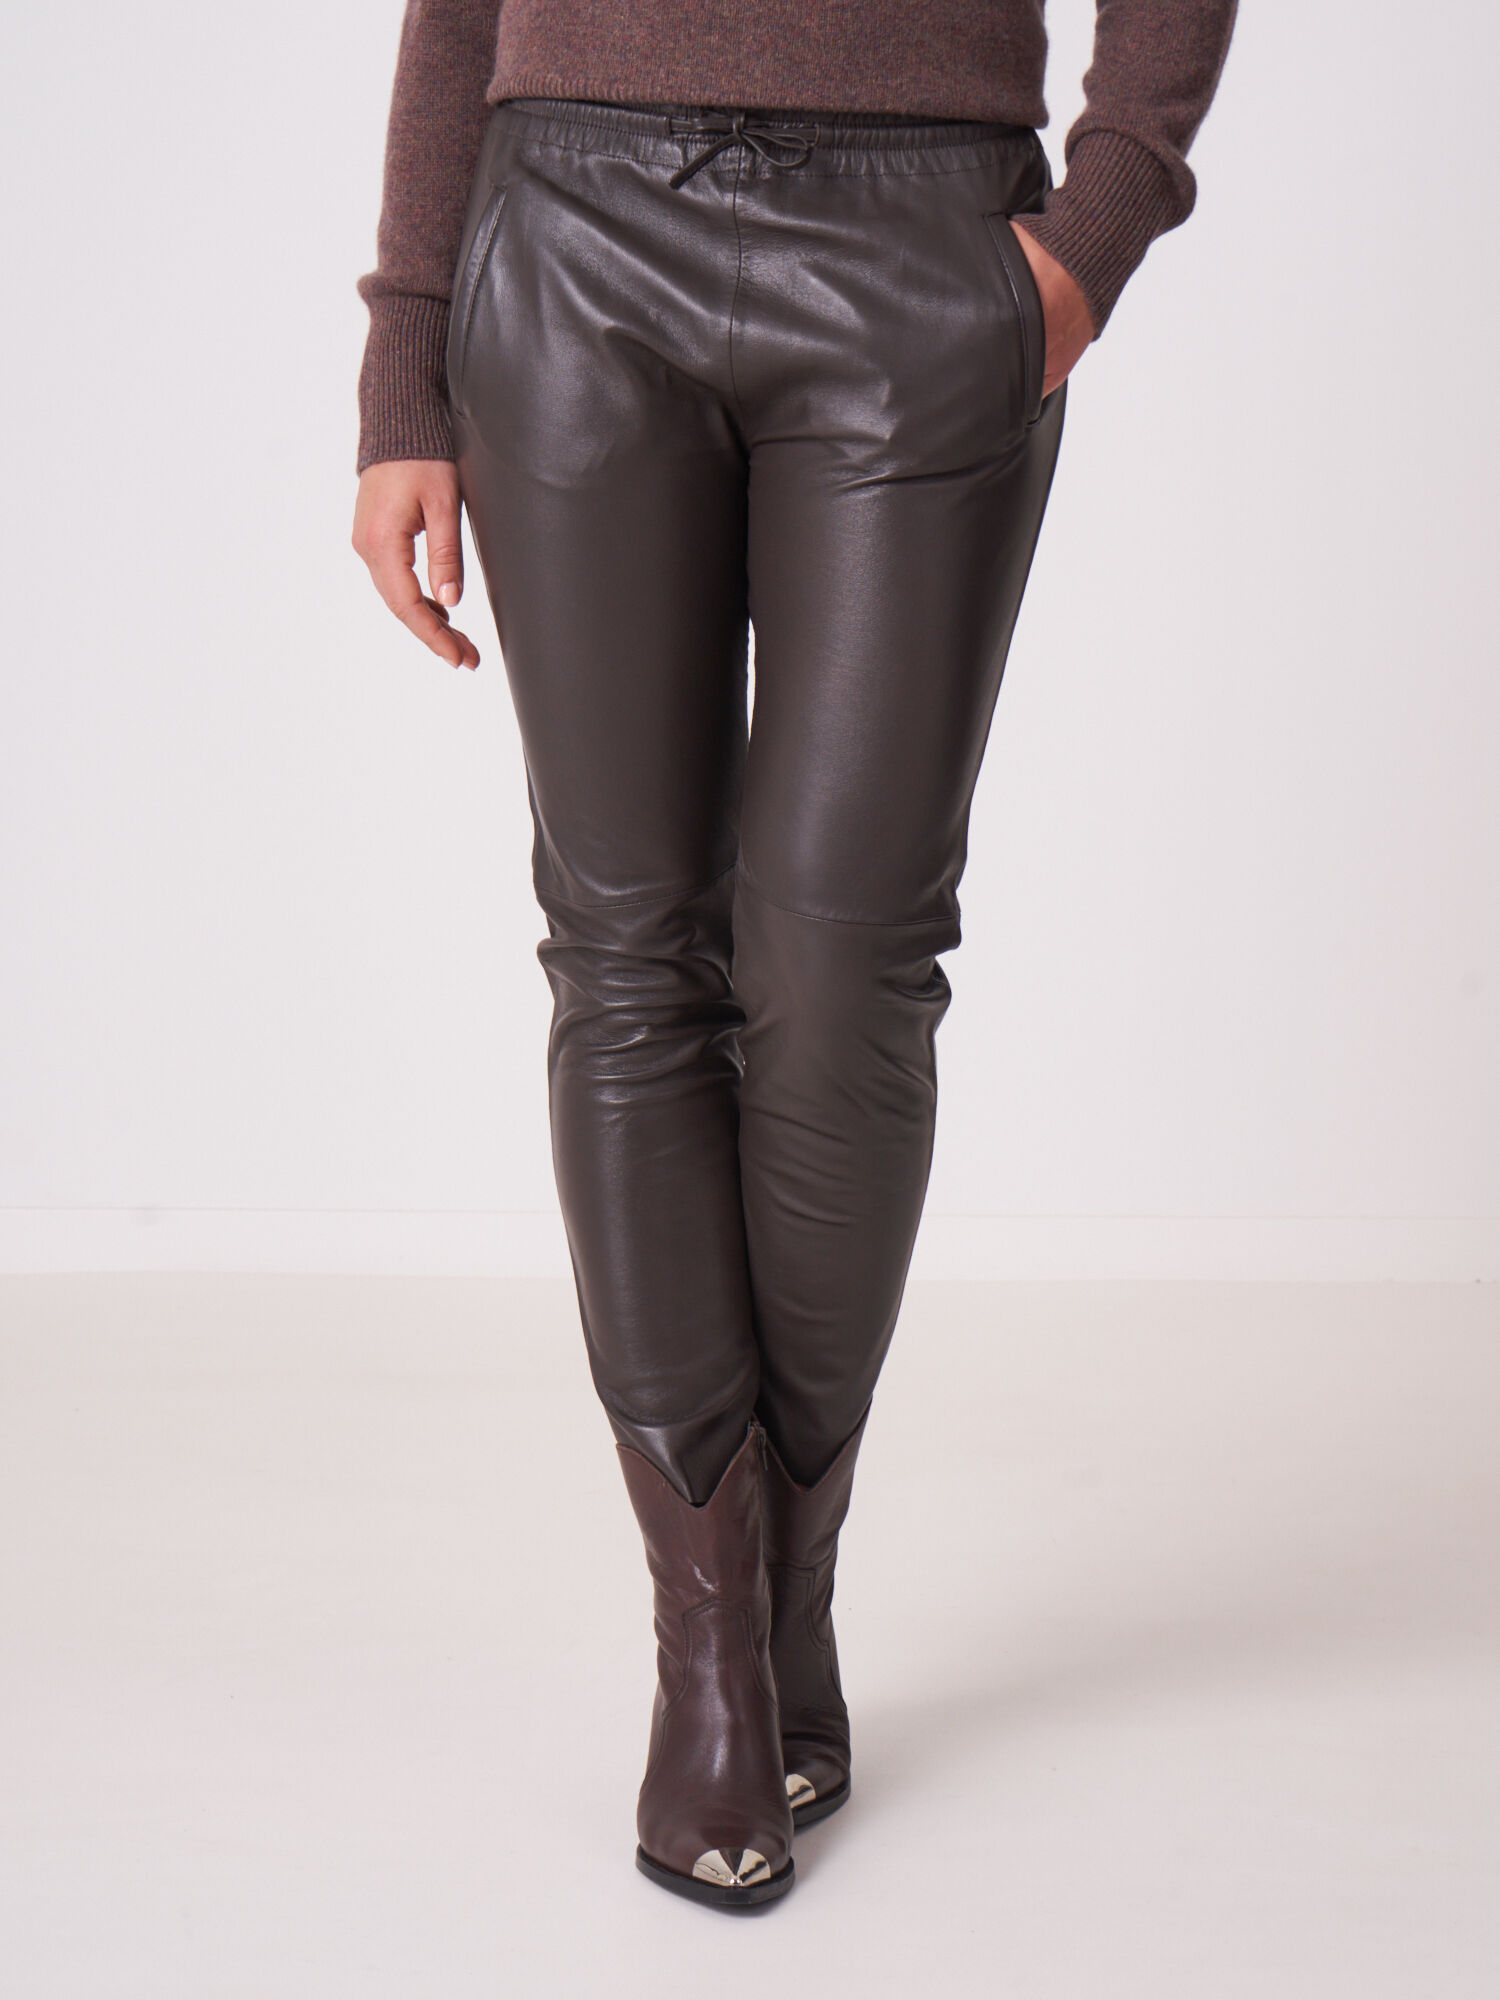 ASOS DESIGN dad jeans in dark brown leather look | ASOS